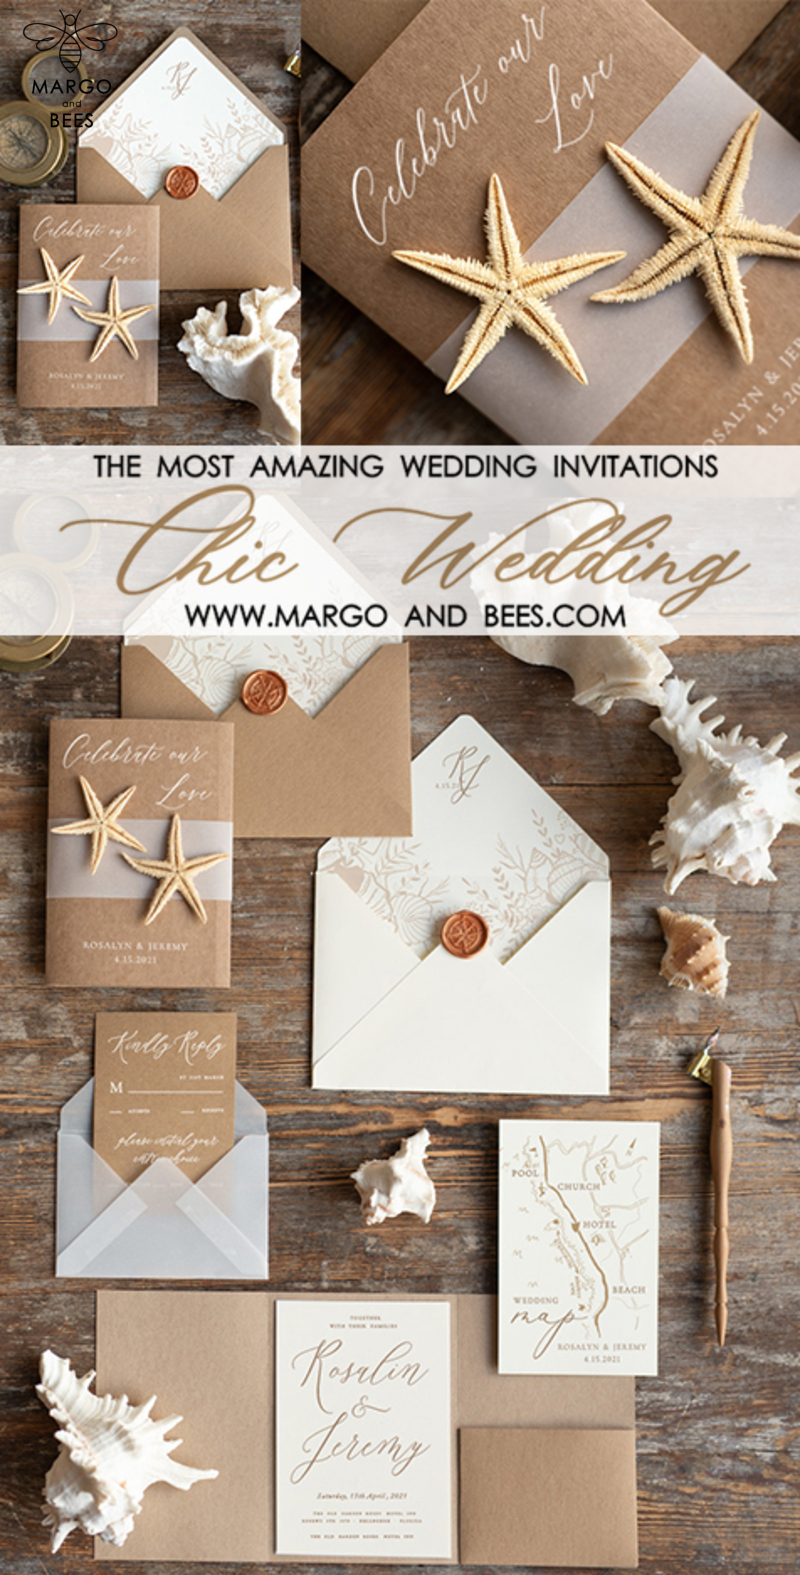 Beach  Wedding invitations Vellum bally band Wedding Invites with starfish Rustic Pocket Fold wedding Cards -6